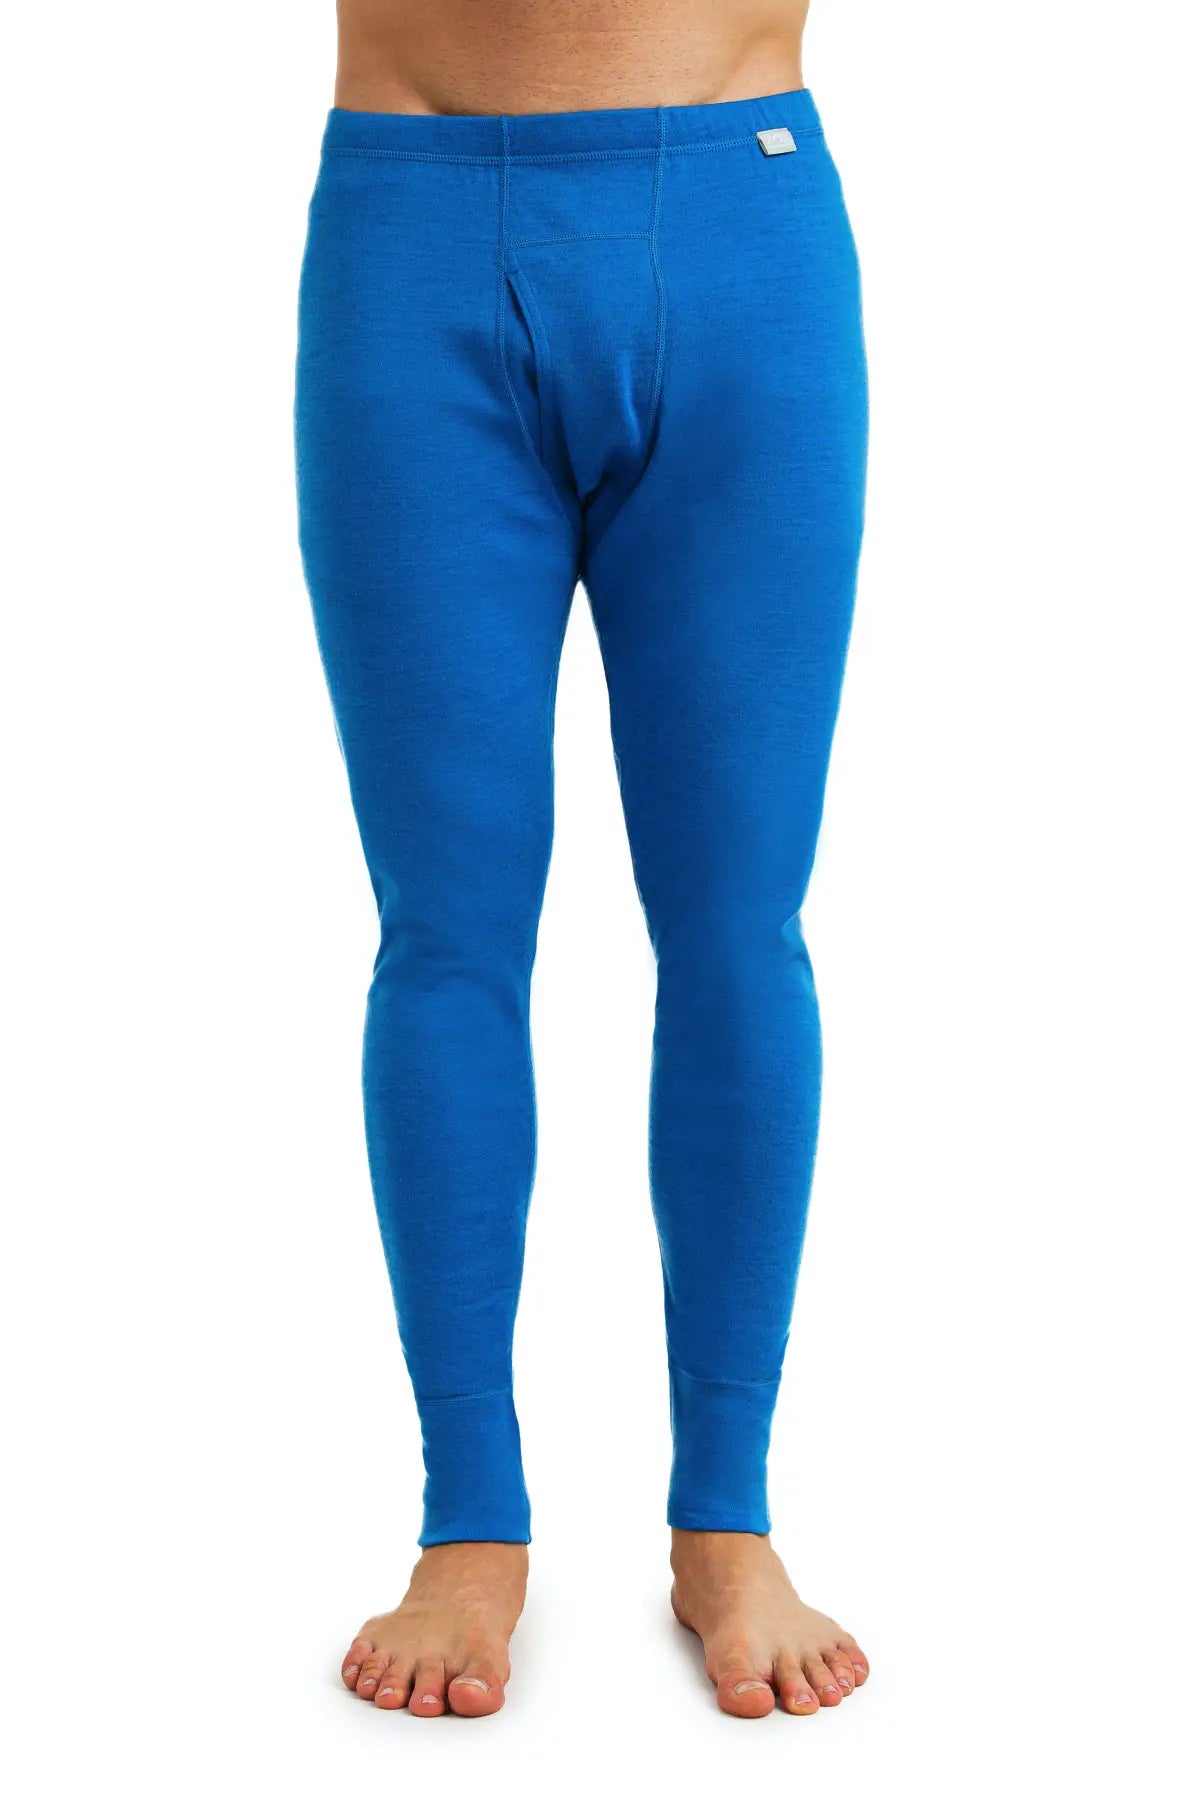 Natural Merino Wool Leggings - Mens Underwear Long Johns - Pajama Pjs  Bottom Underpants Tights - Base Layer Undergarment Pants Gift for Him